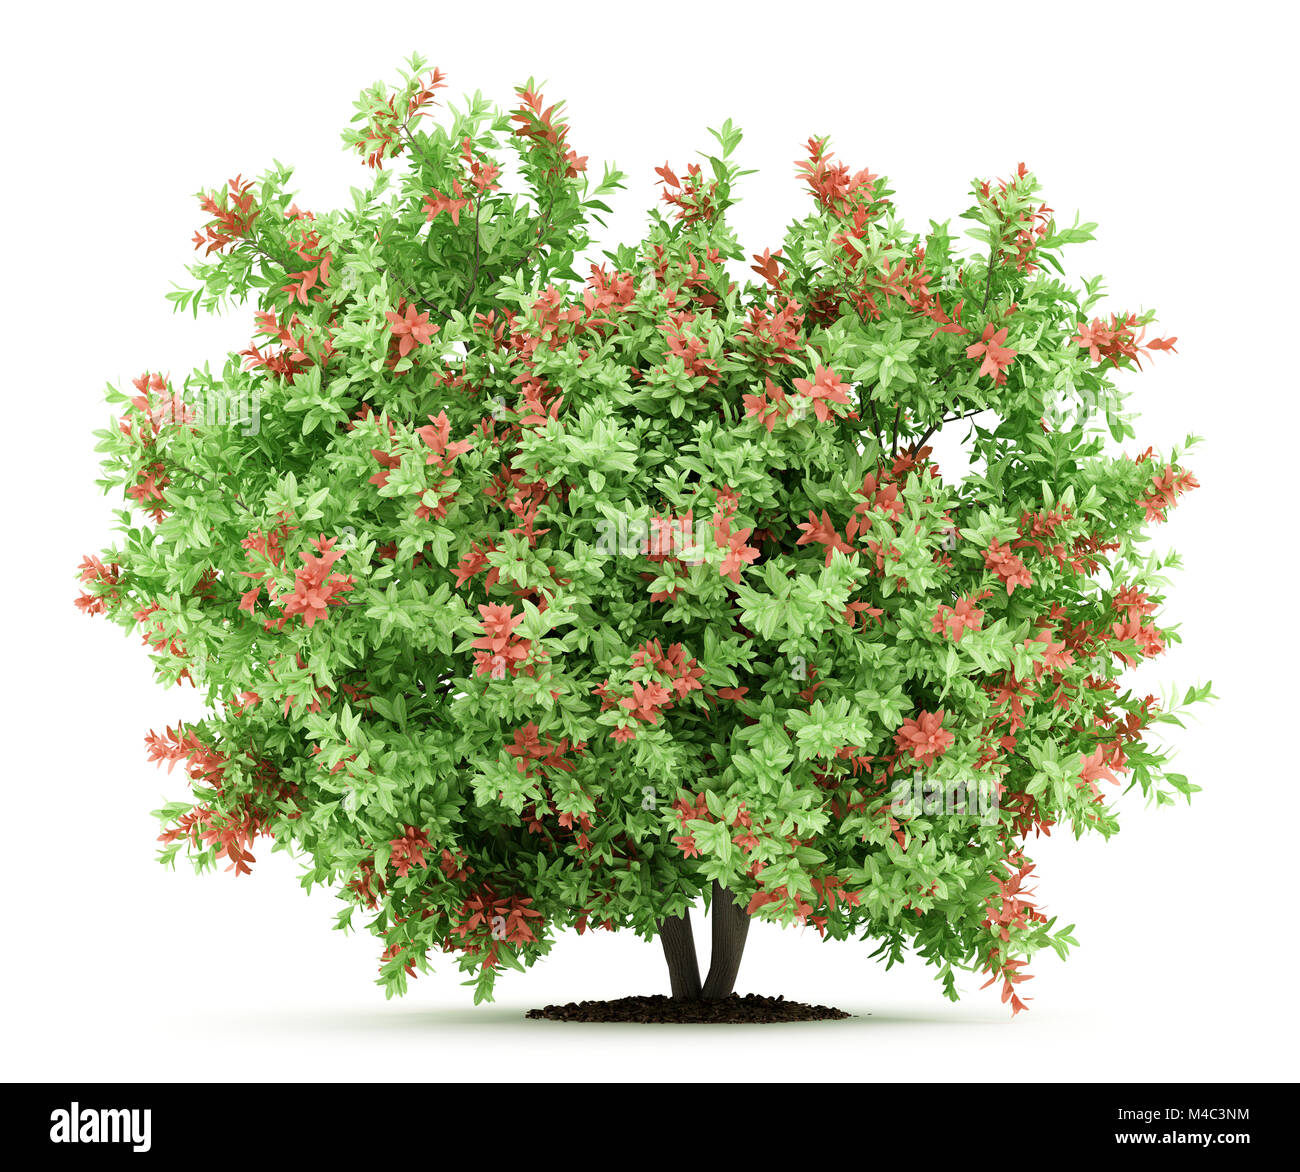 pidgeon berry shrub plant isolated on white background Stock Photo